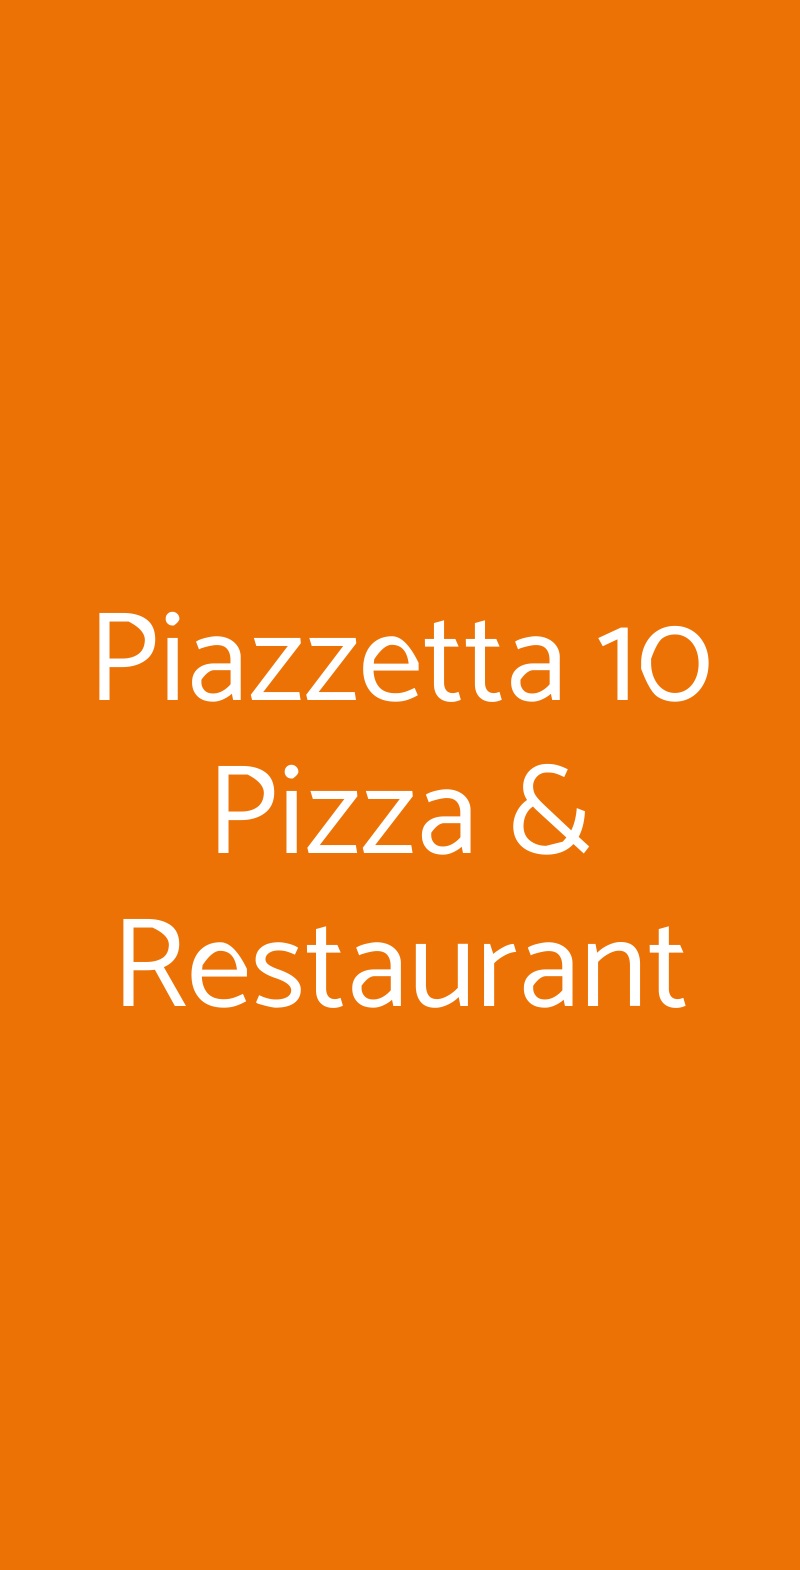 Piazzetta 10 Pizza & Restaurant Monopoli menù 1 pagina